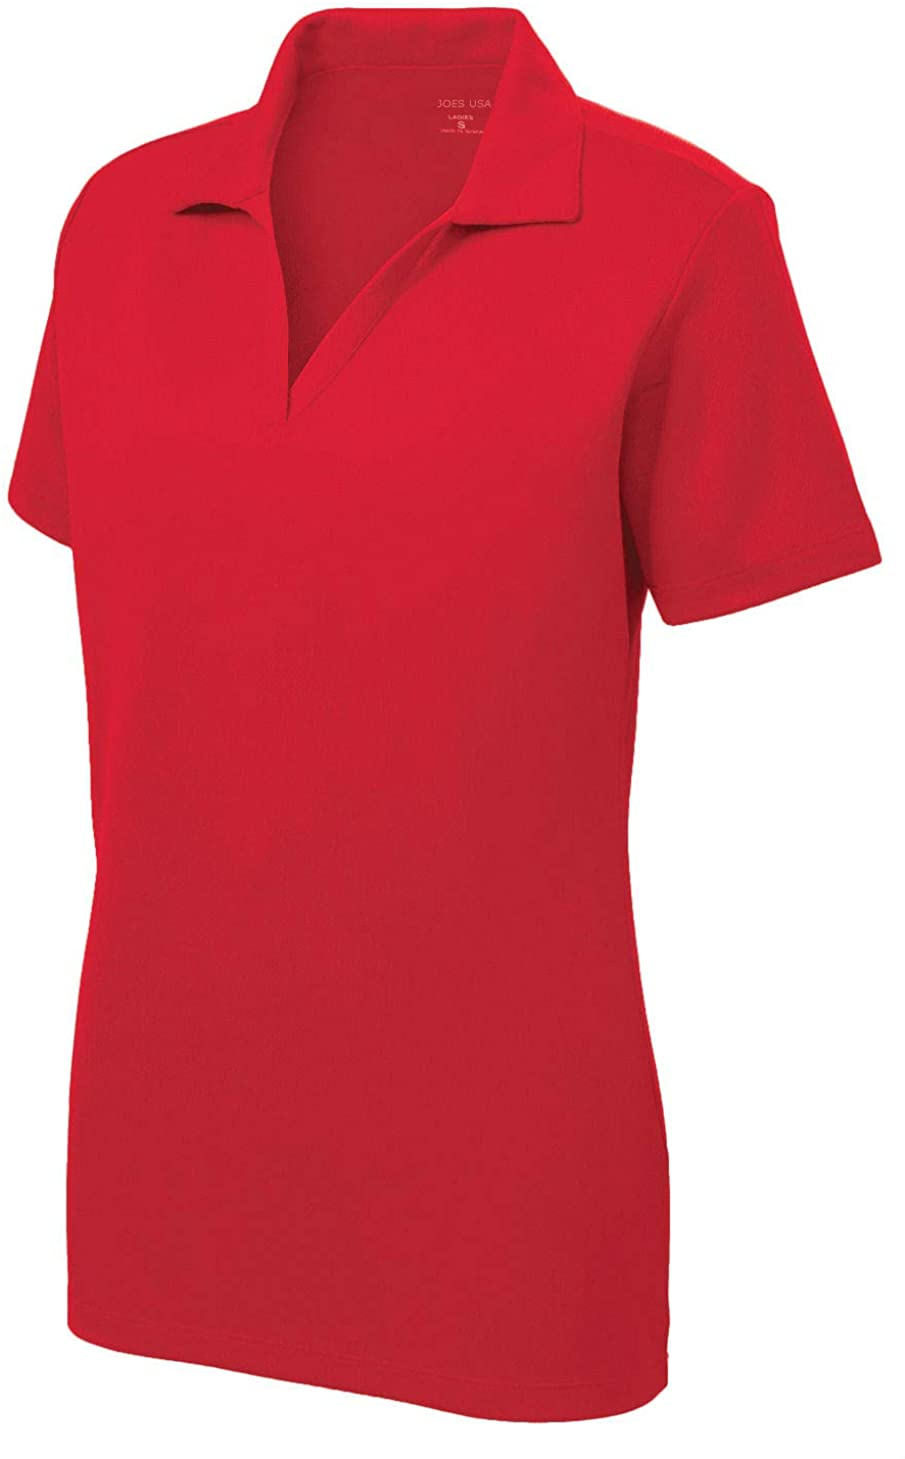 Womens Dri-Equip Short Sleeve Racer Mesh Polo Shirts in Size XS-4XL